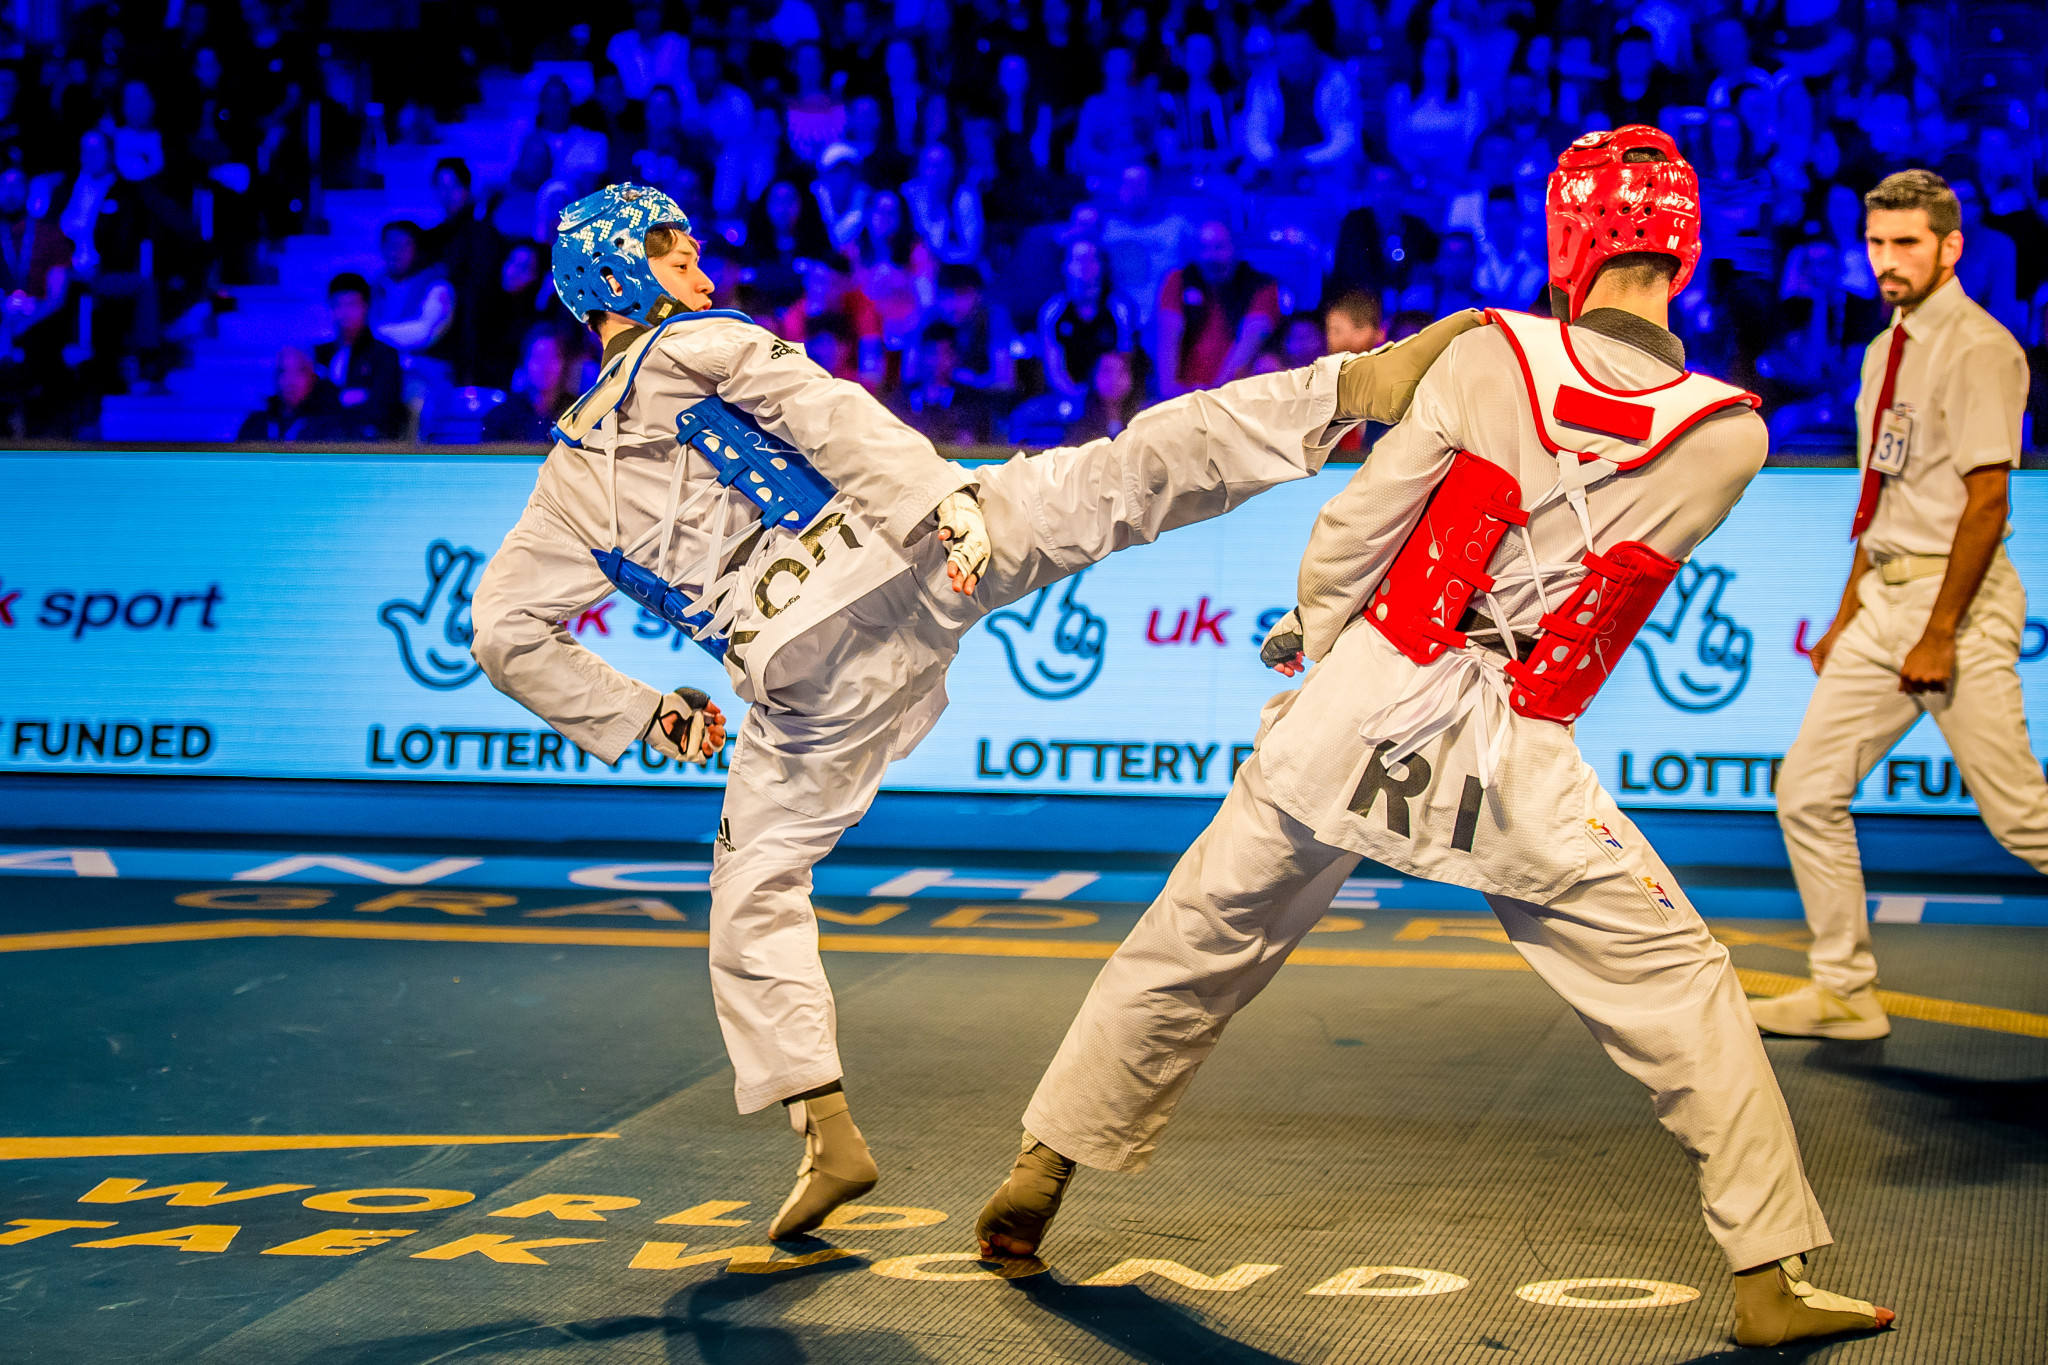 Williams wins home gold at World Taekwondo Grand Prix in Manchester